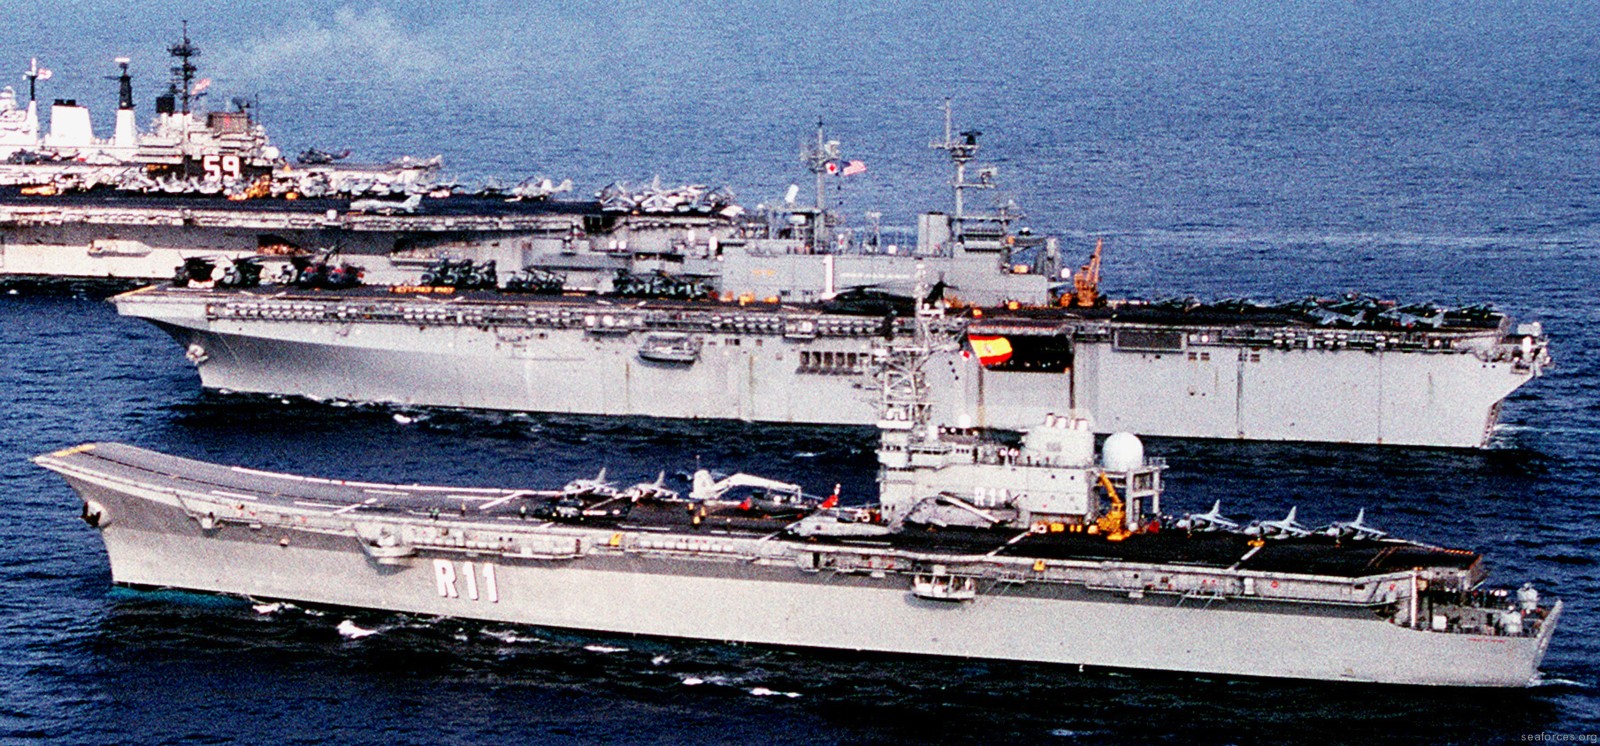 r-11 sps principe de asturias aircraft carrier vstol spanish navy 13